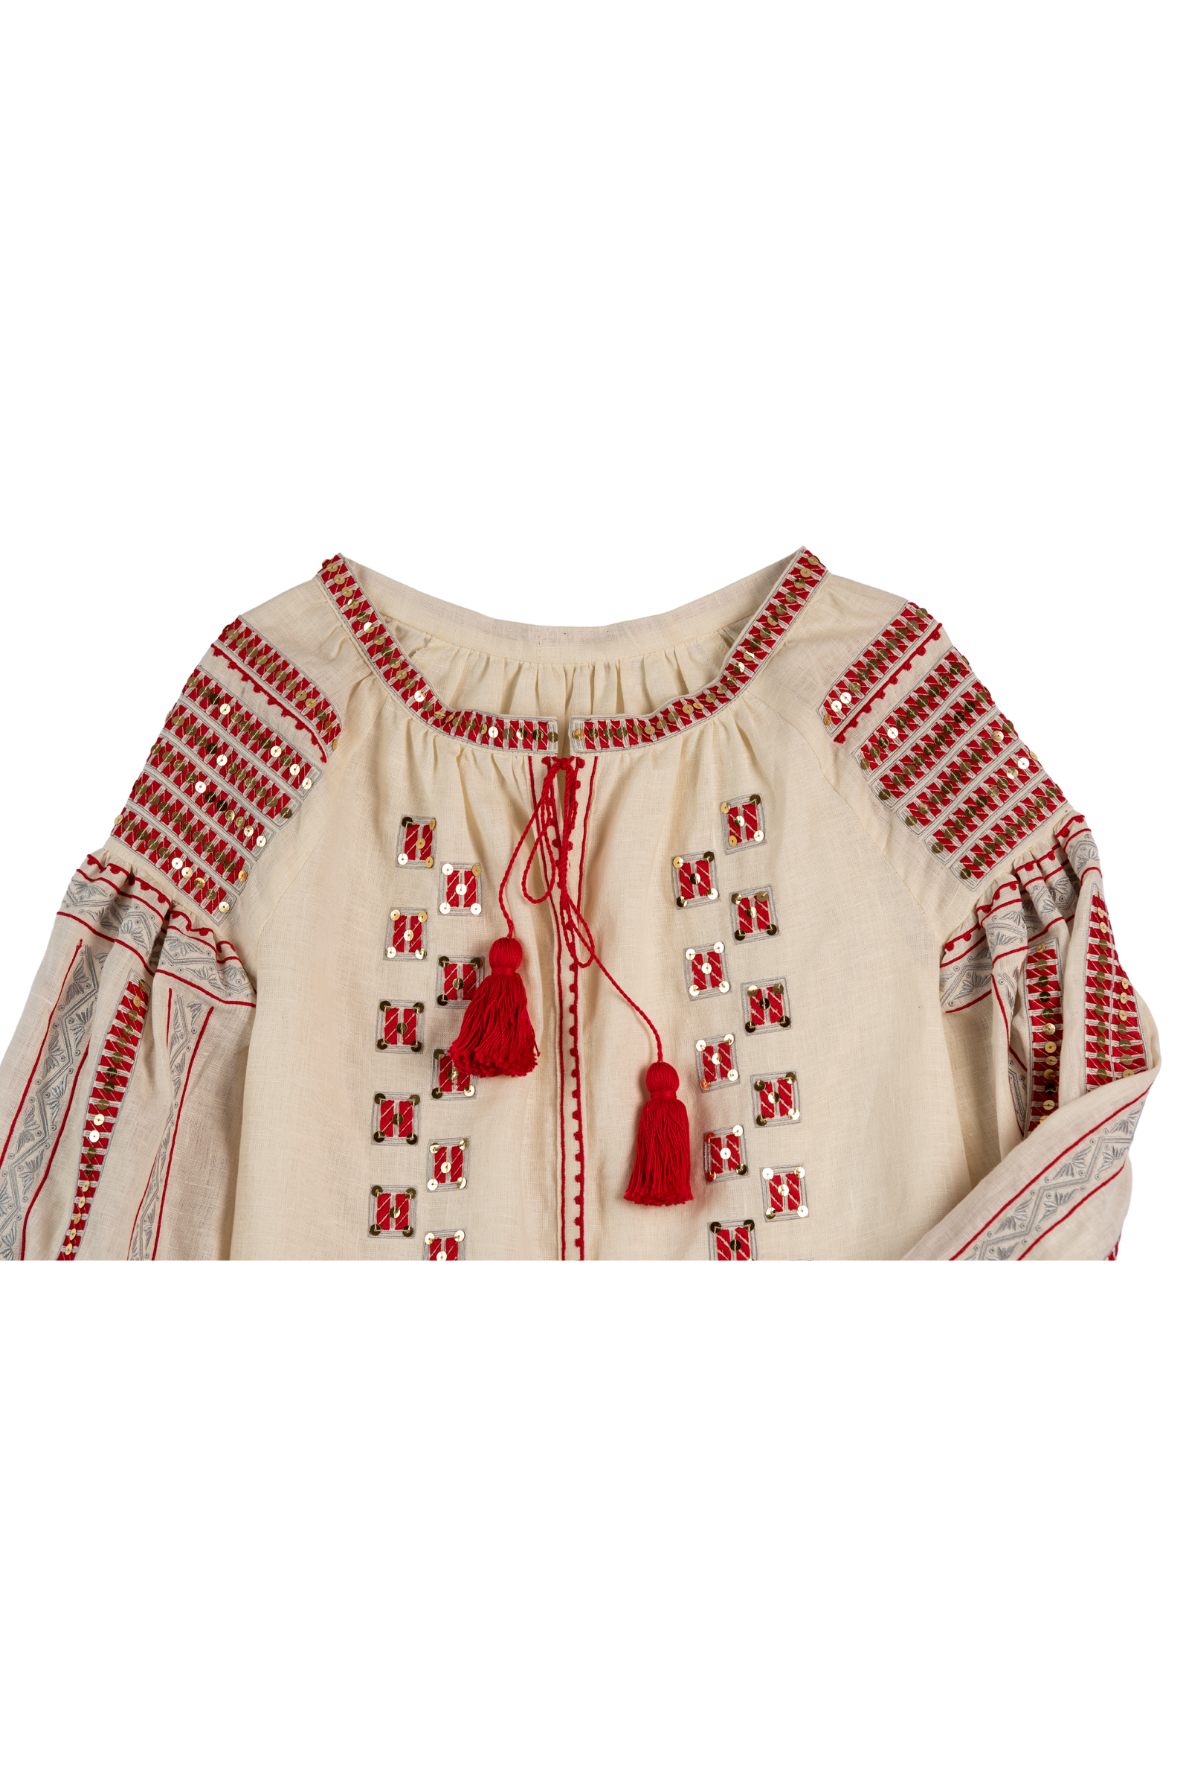 Anishka Embroidered Ukrainian Top - Ivory, Red, Silver by Larkin Lane